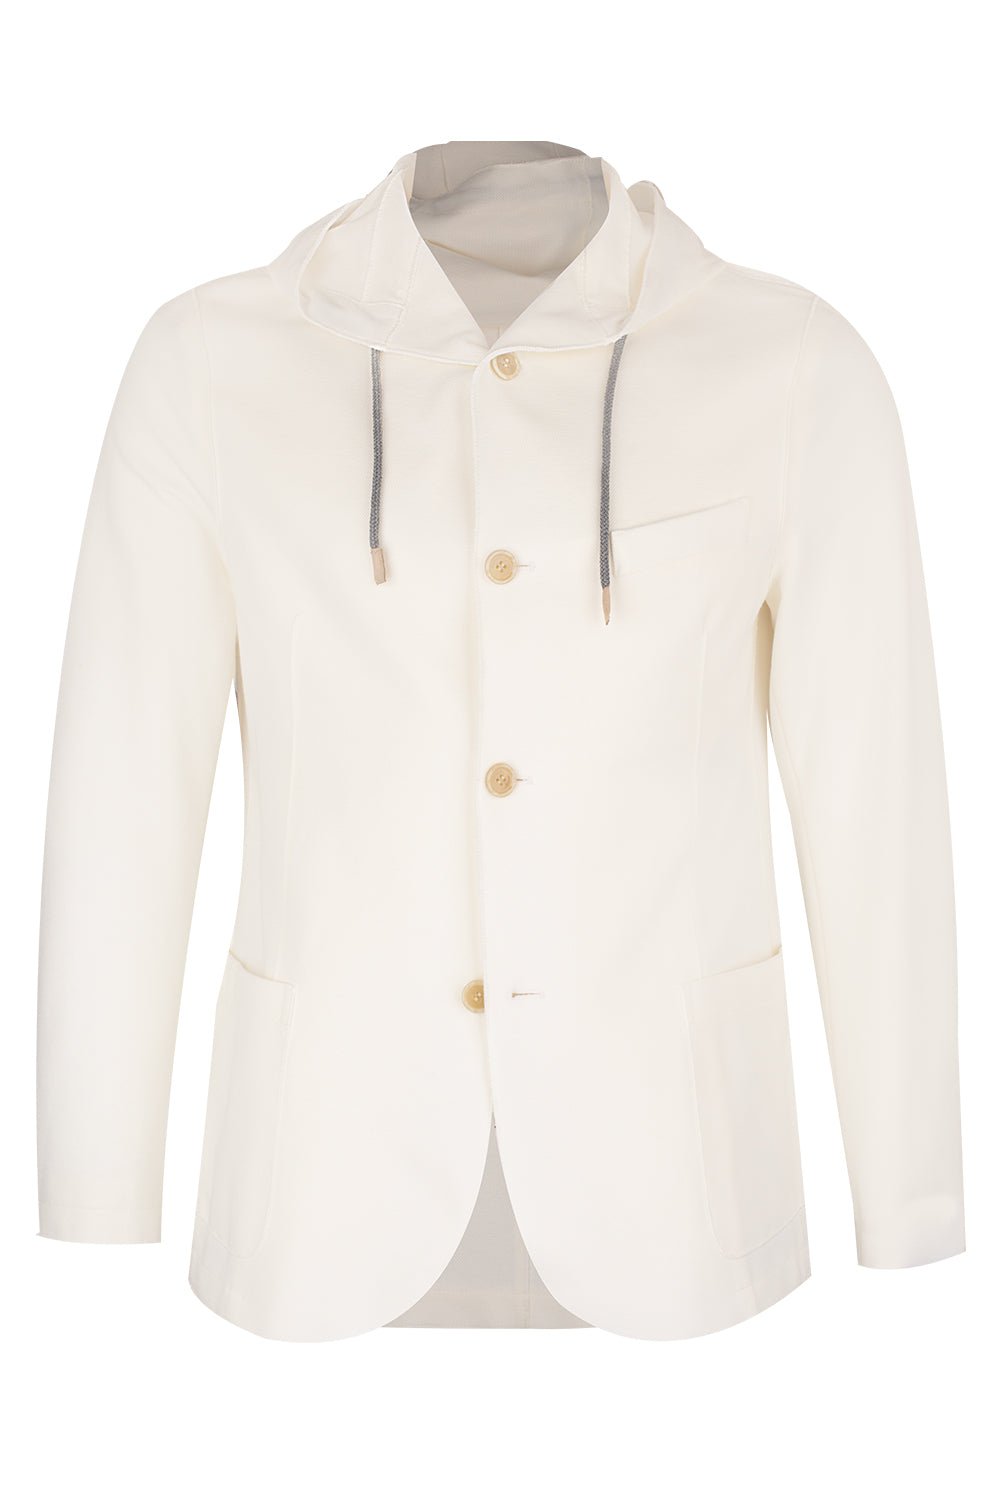 ELEVENTY-Hooded Jacket - White-